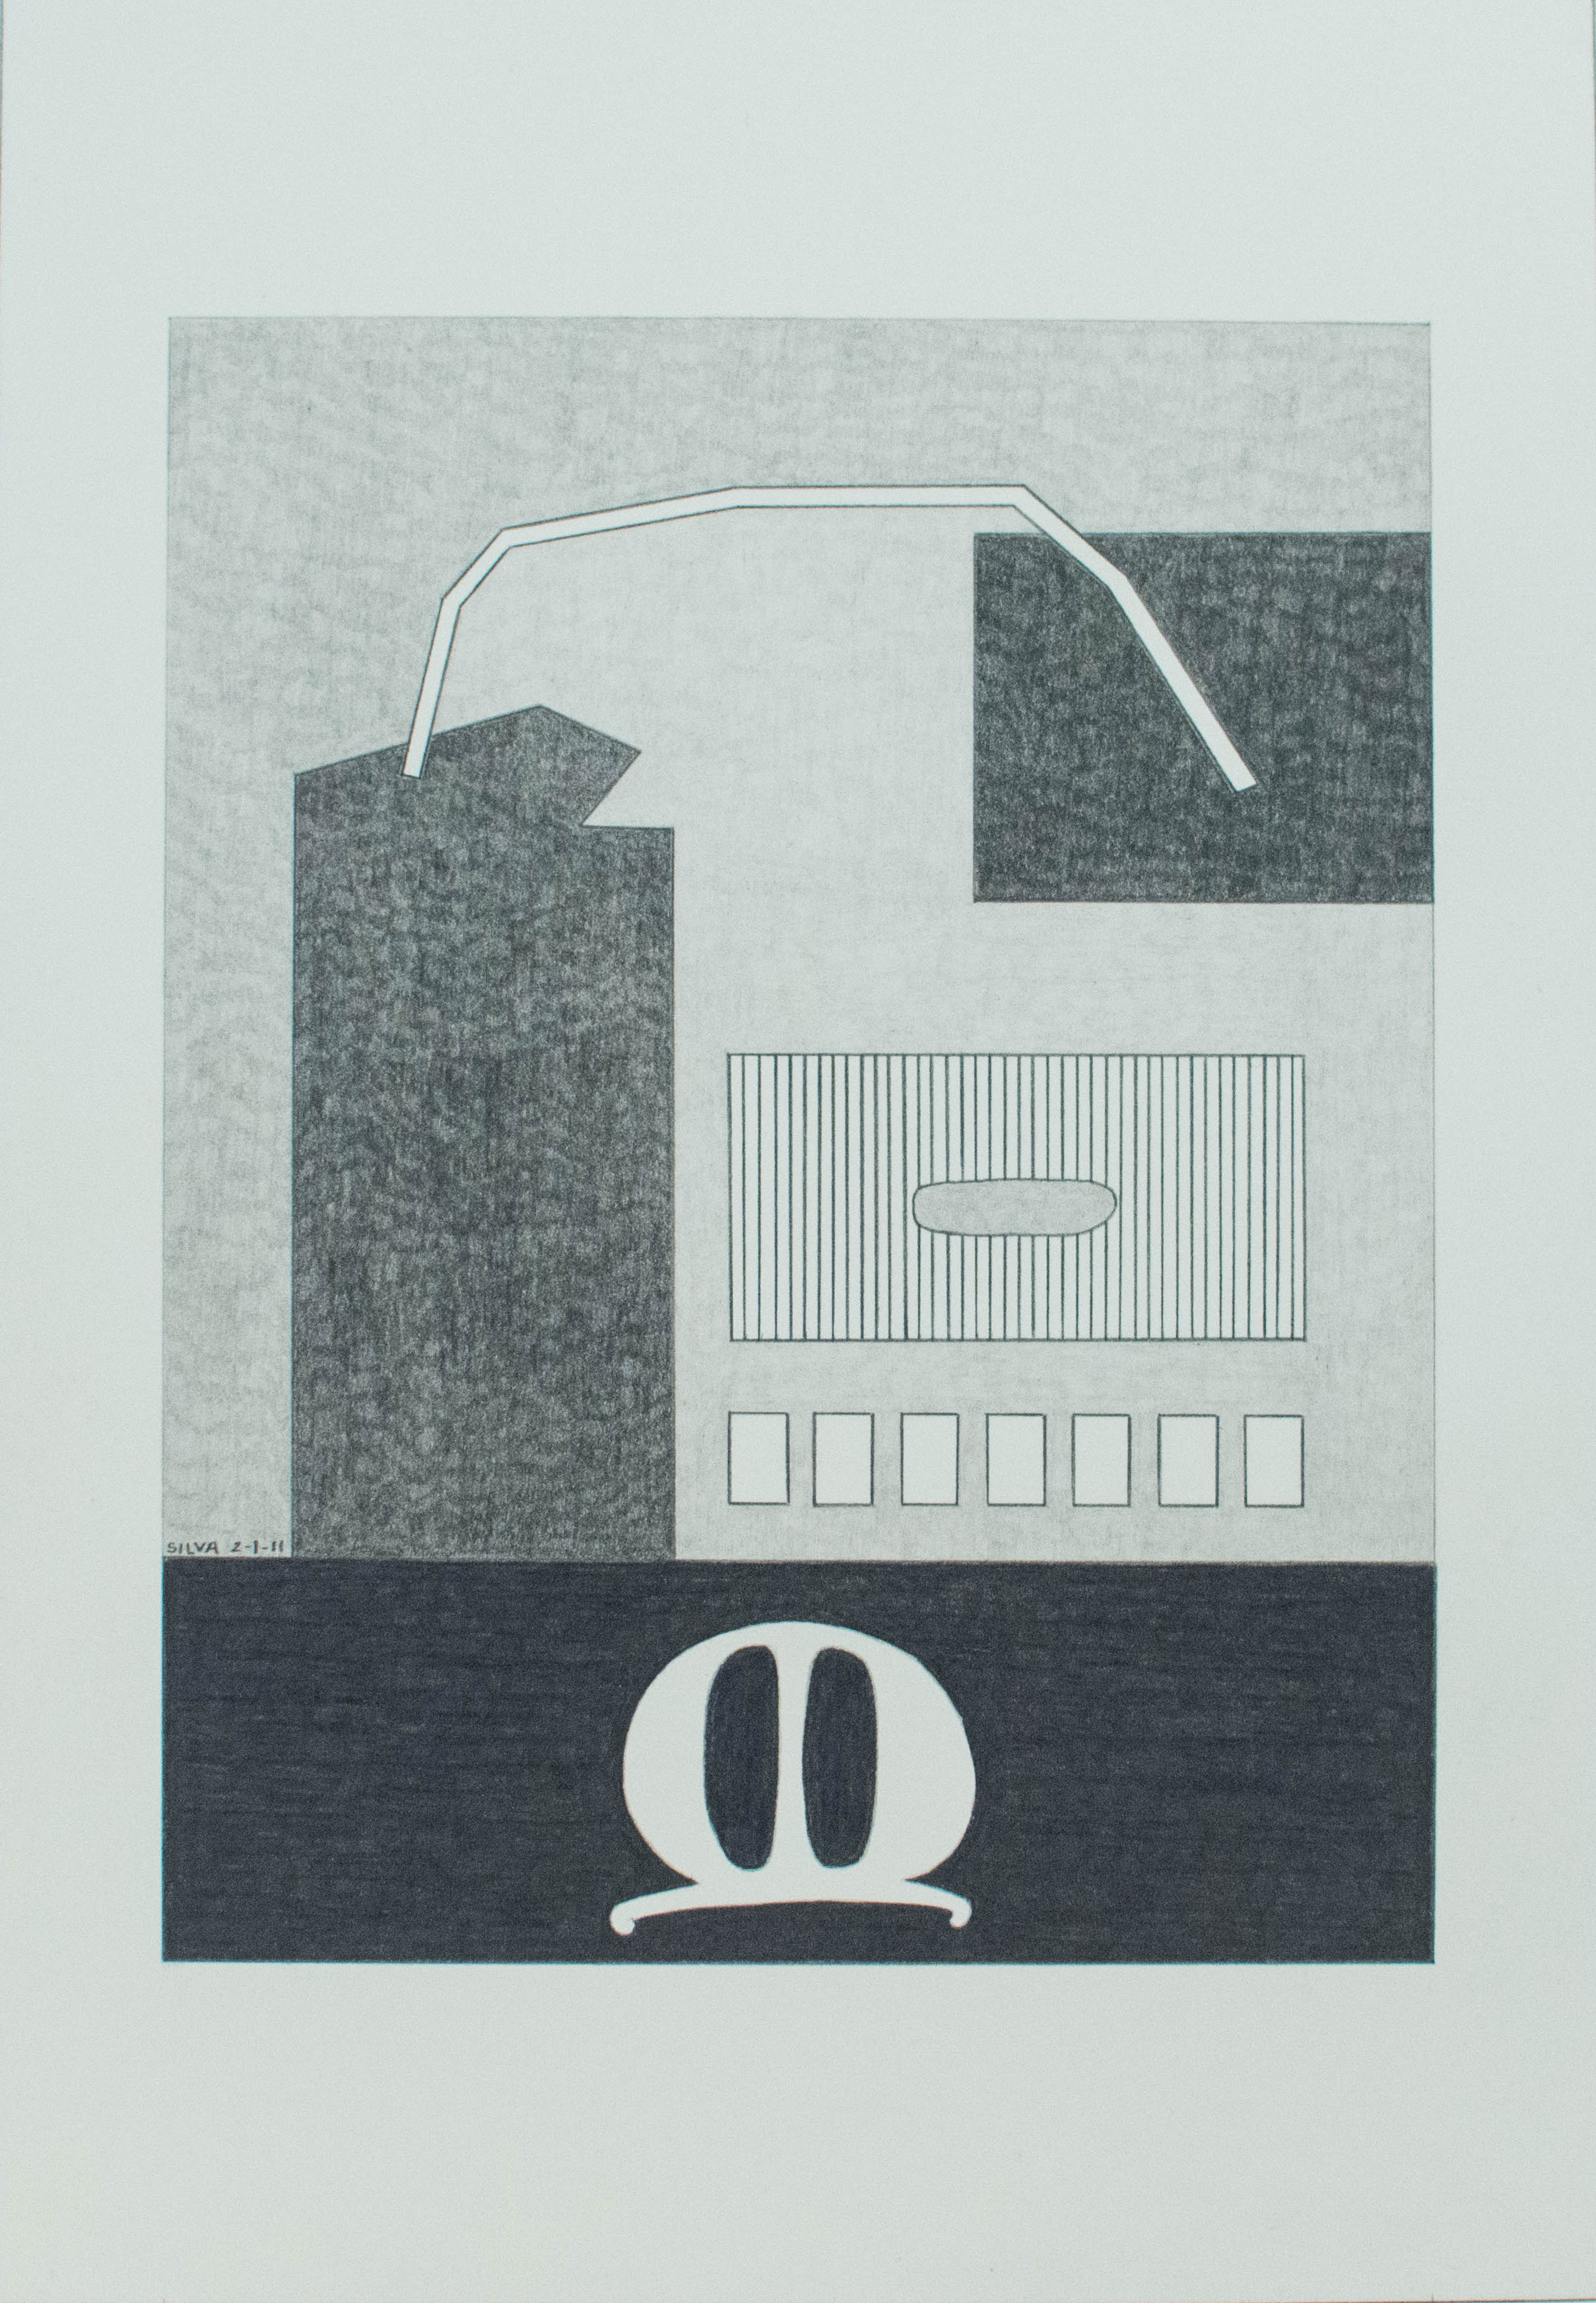 2-1-11, 2011, Graphite on paper, 7 x 10 inches